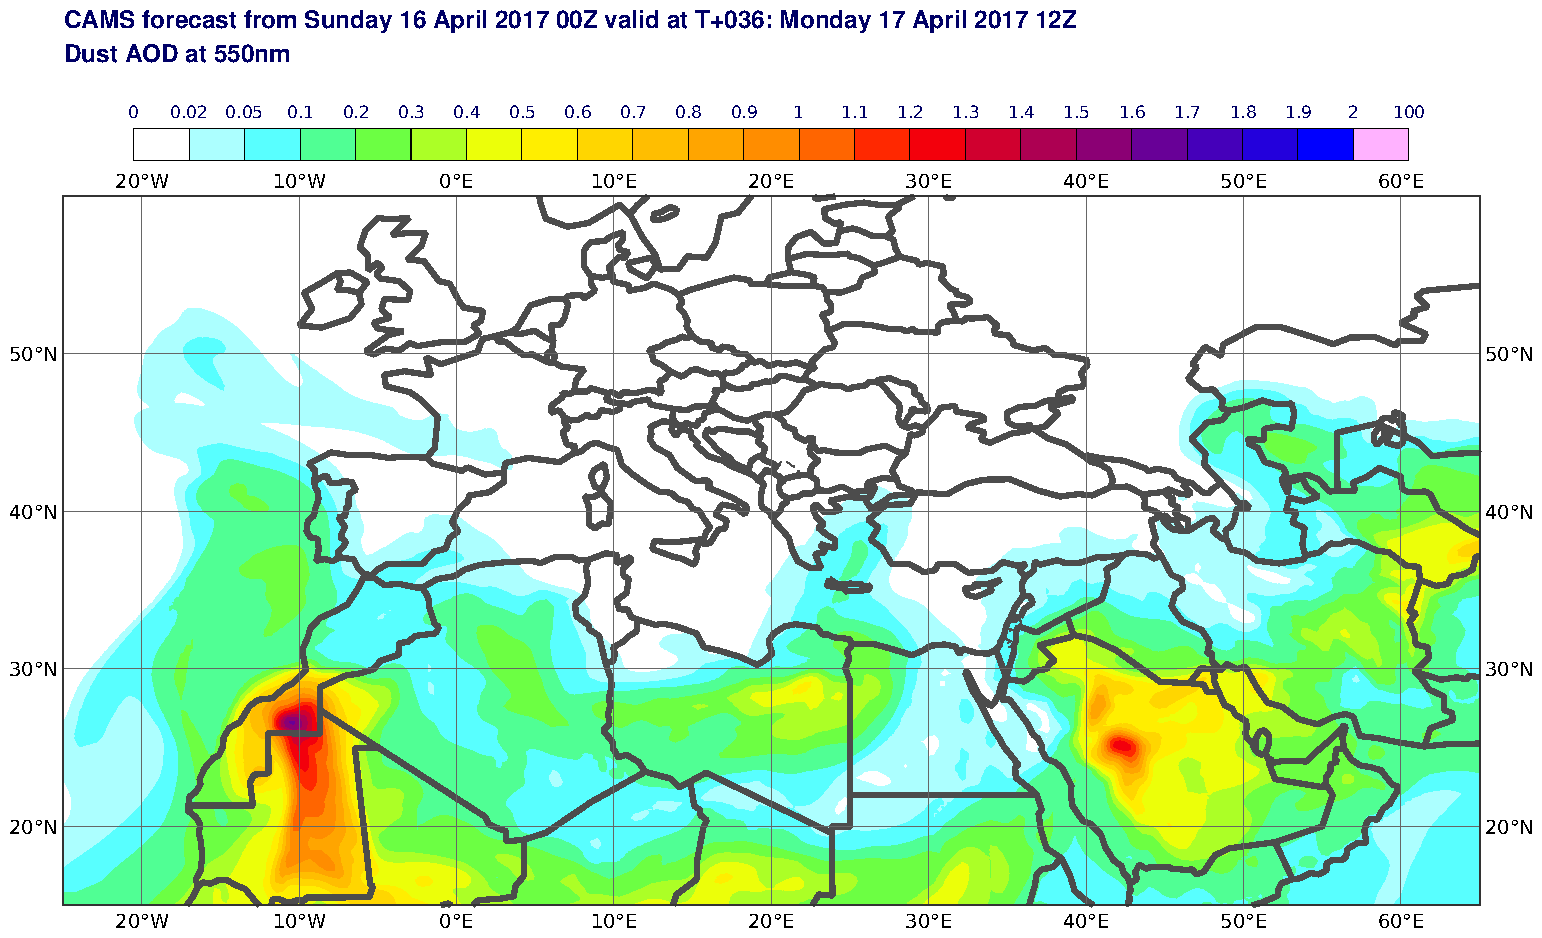 Dust AOD at 550nm valid at T36 - 2017-04-17 12:00